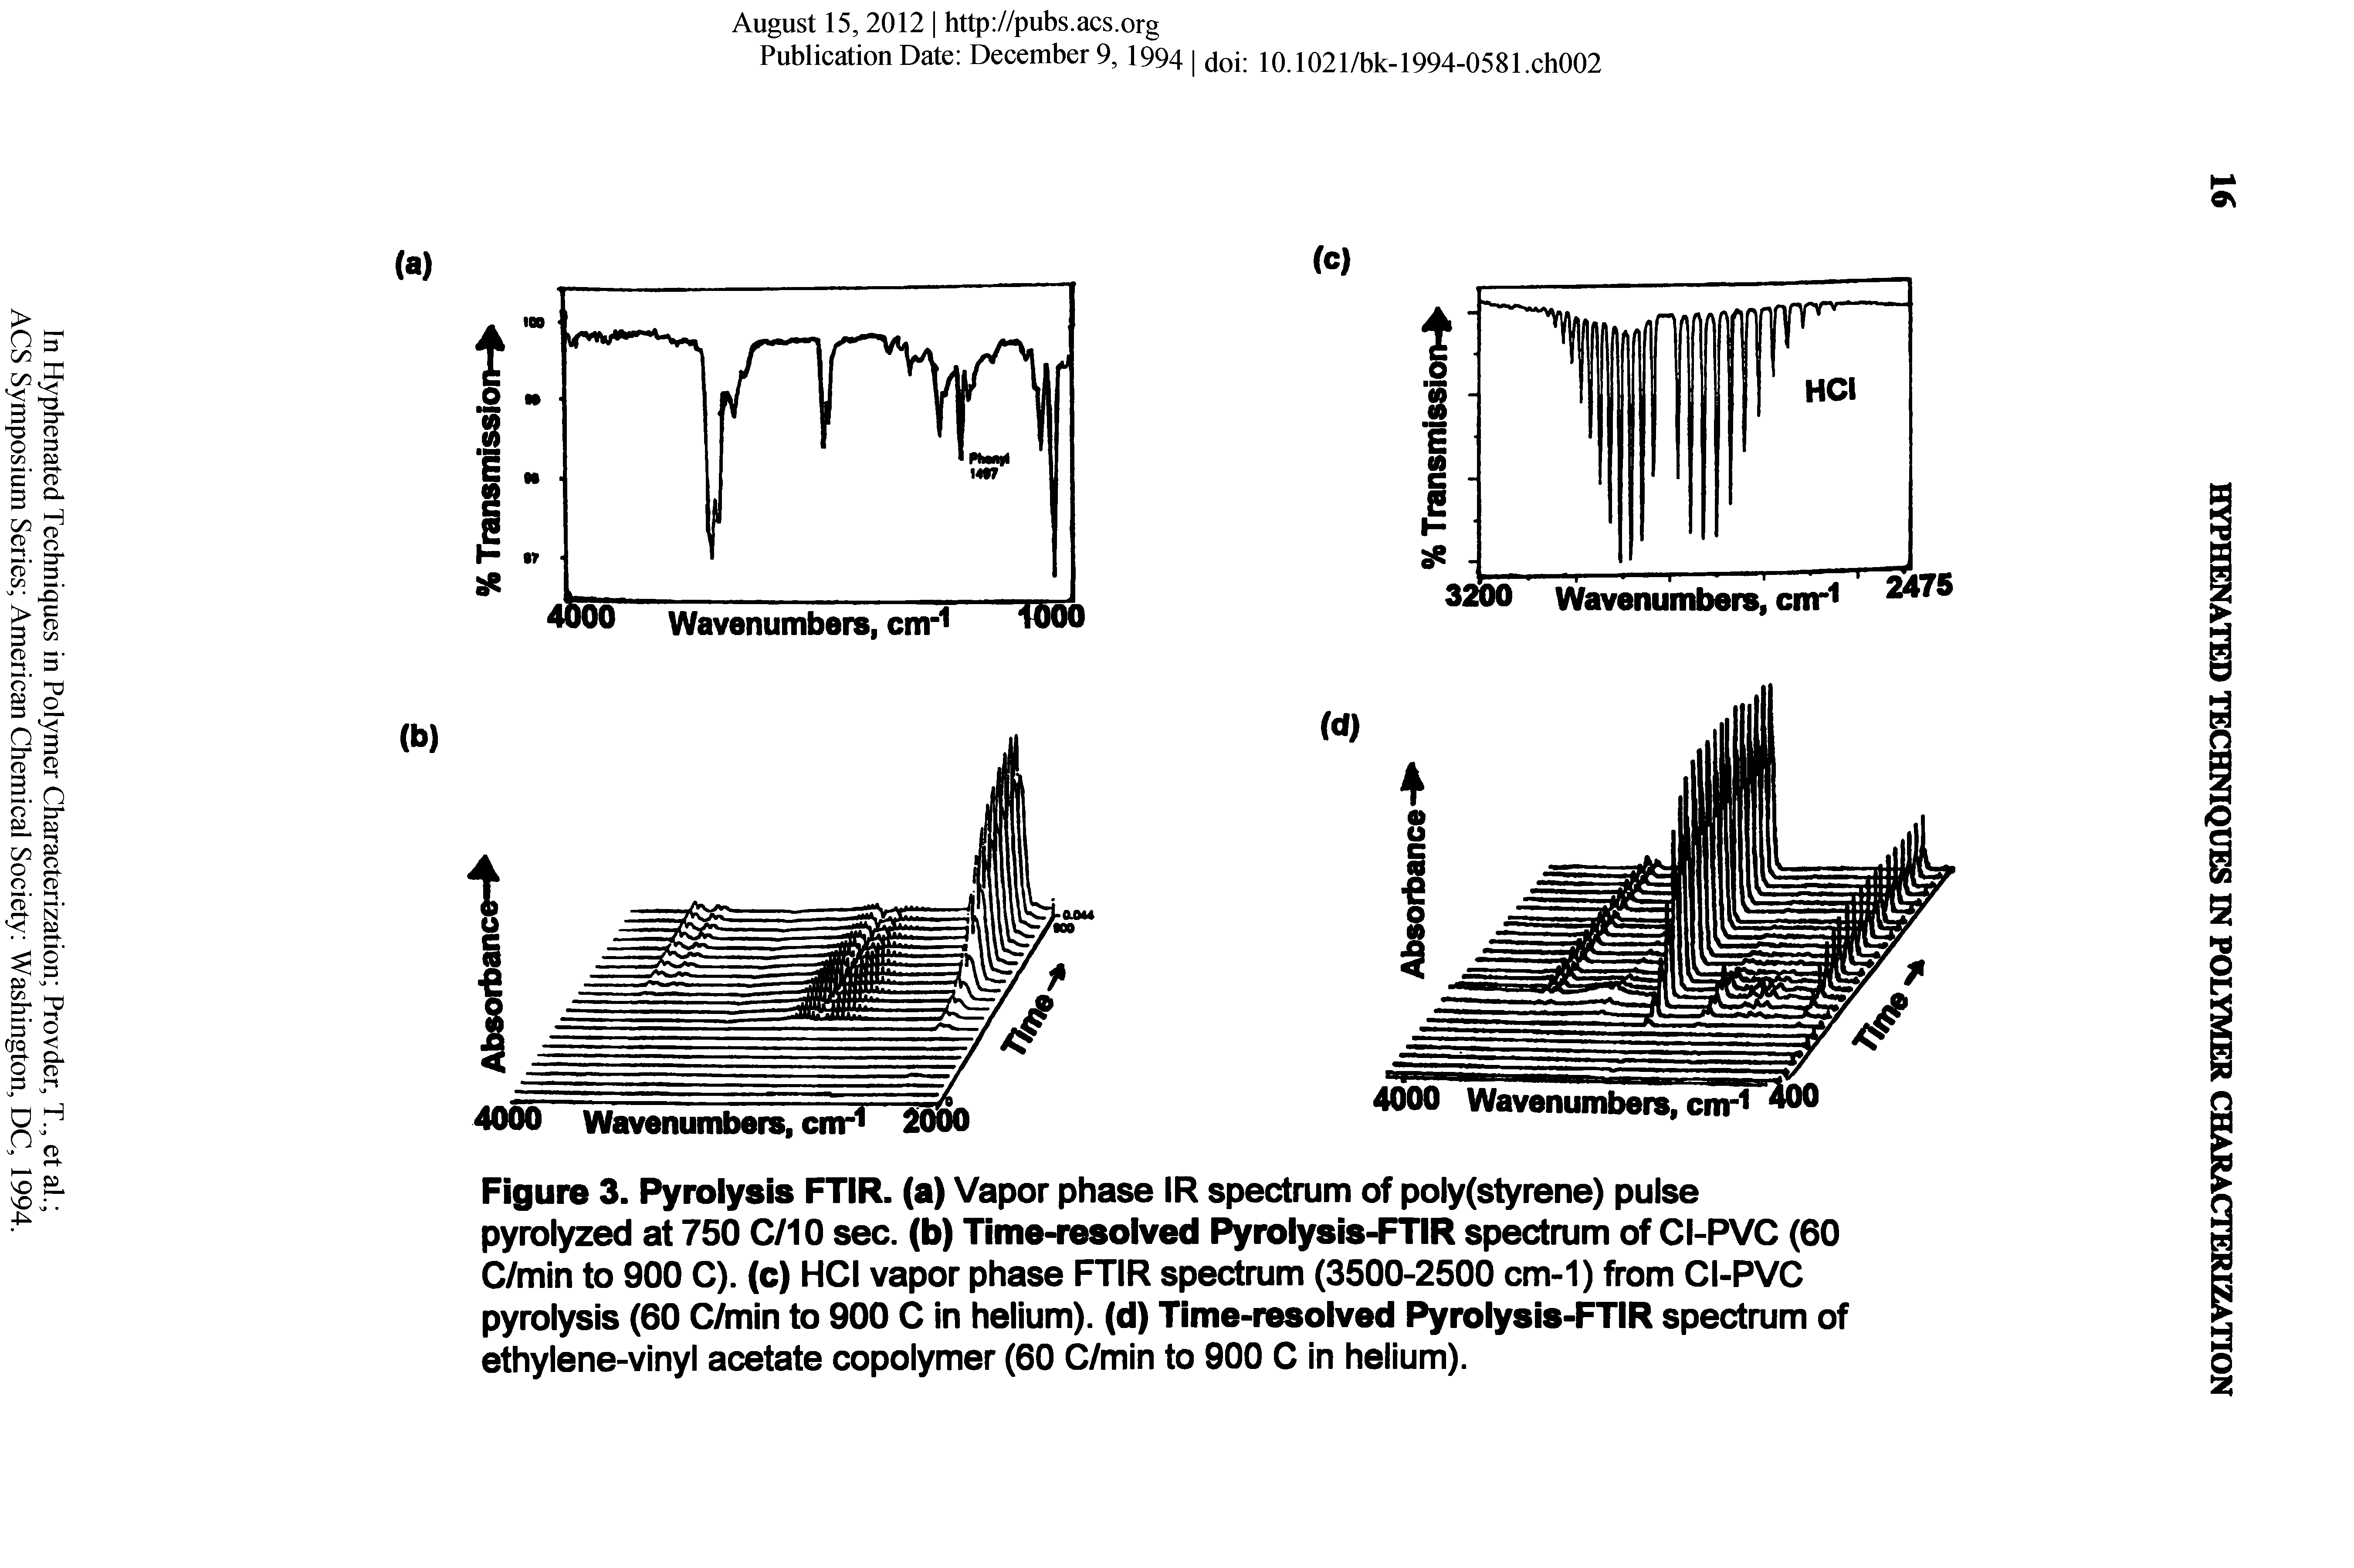 Figure 3. Pyrolysis FTIR. (a) Vapor phase IR spectrum of poly(styrene) pulse pyrolyzed at 750 C/10 sec. (b) TimsHosolved l rolysis-FTIR spectrum of CI-PVC (60 C/min to 900 C). (c) HCI vapor phase FTIR spectrum (3500-2500 cm-1) firam CI-PVC pyrolysis (60 C/min to 900 C in helium), (d) Time-resolved Pyrolysis-FTIR spectrum of ethylene-vinyl acetate copolymer (60 C/min to 900 C in helium).